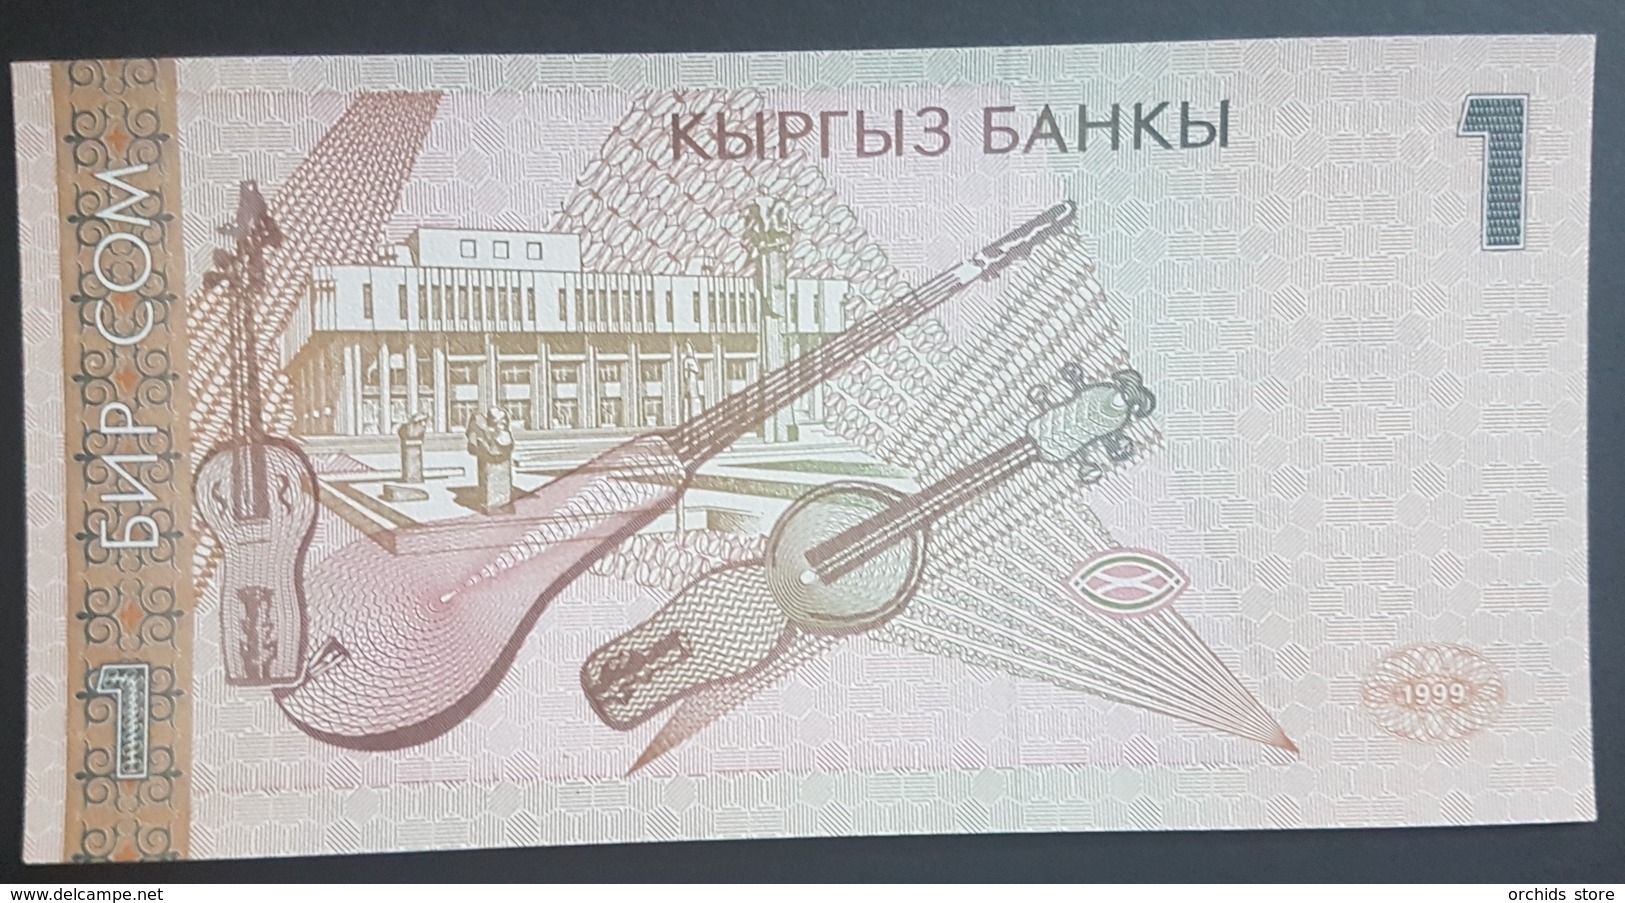 E11g2 - Kyrgyzstan Banknote, 1999, 1 Sum, P-15, UNC - Kirghizistan